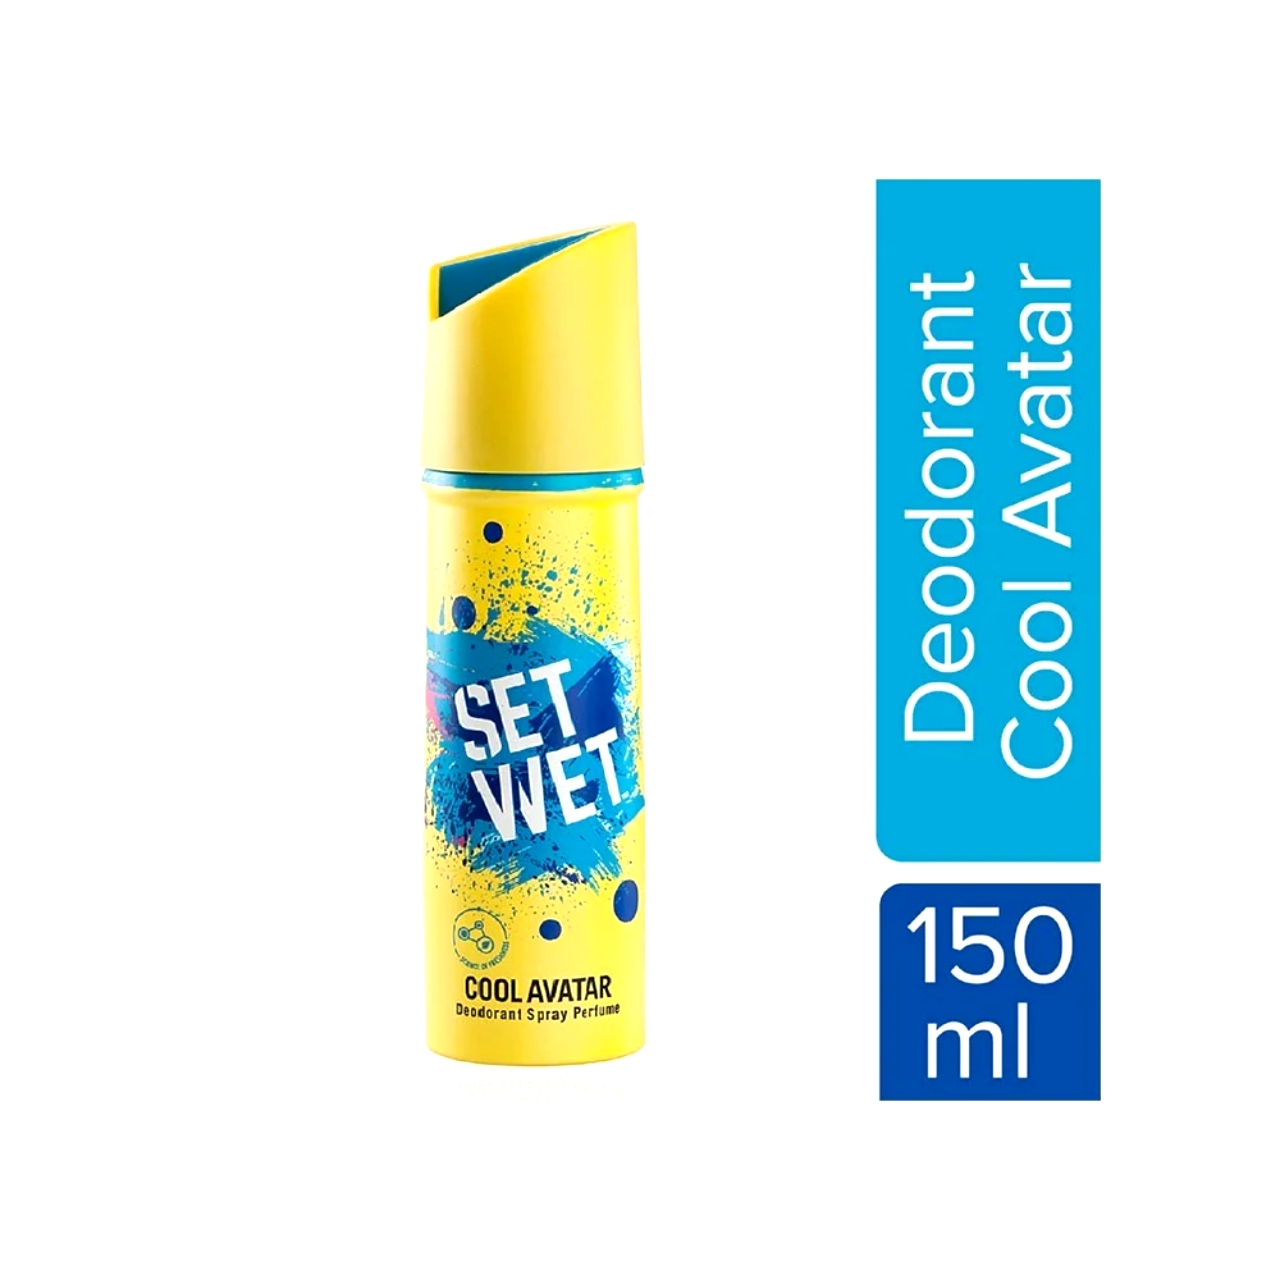 Set Wet Cool Avatar Men's Deodorant, (150ml)